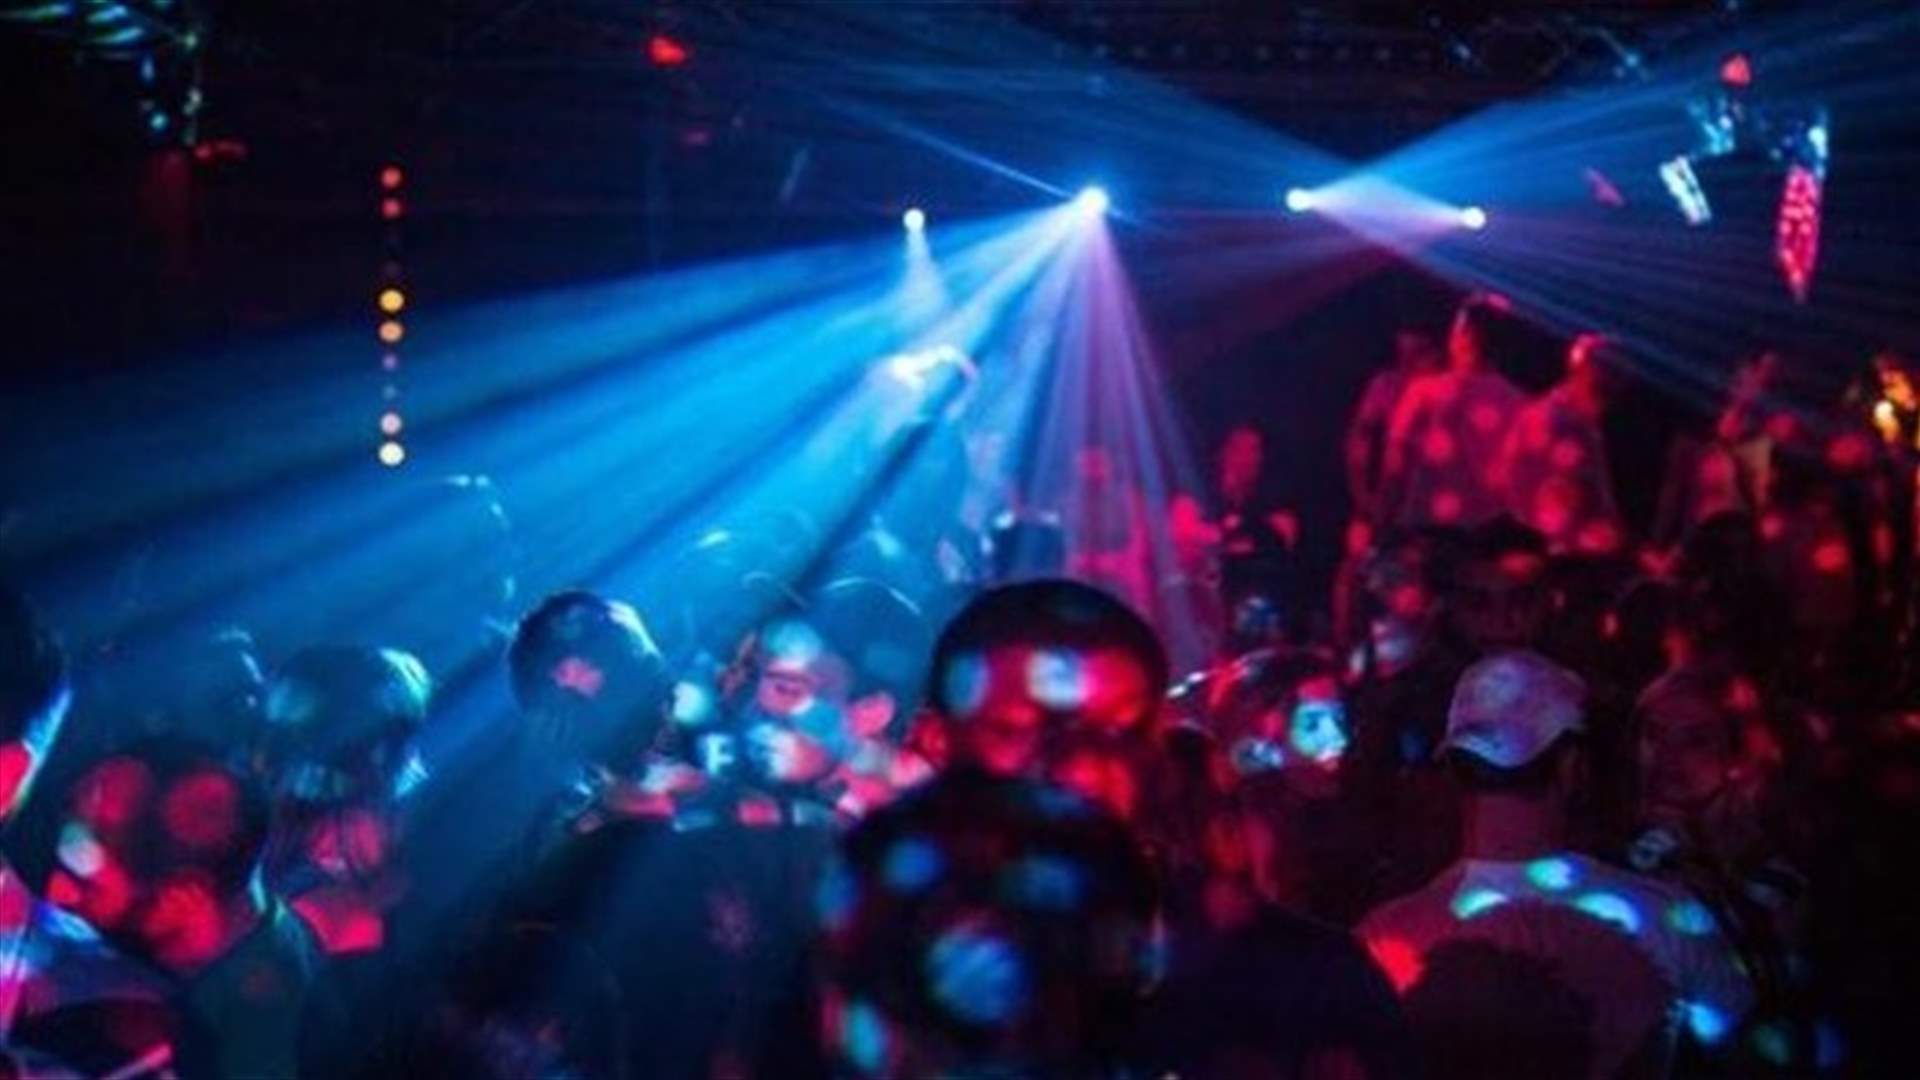 Disco ball falls from Beirut nightclub ceiling leaving 3 injured